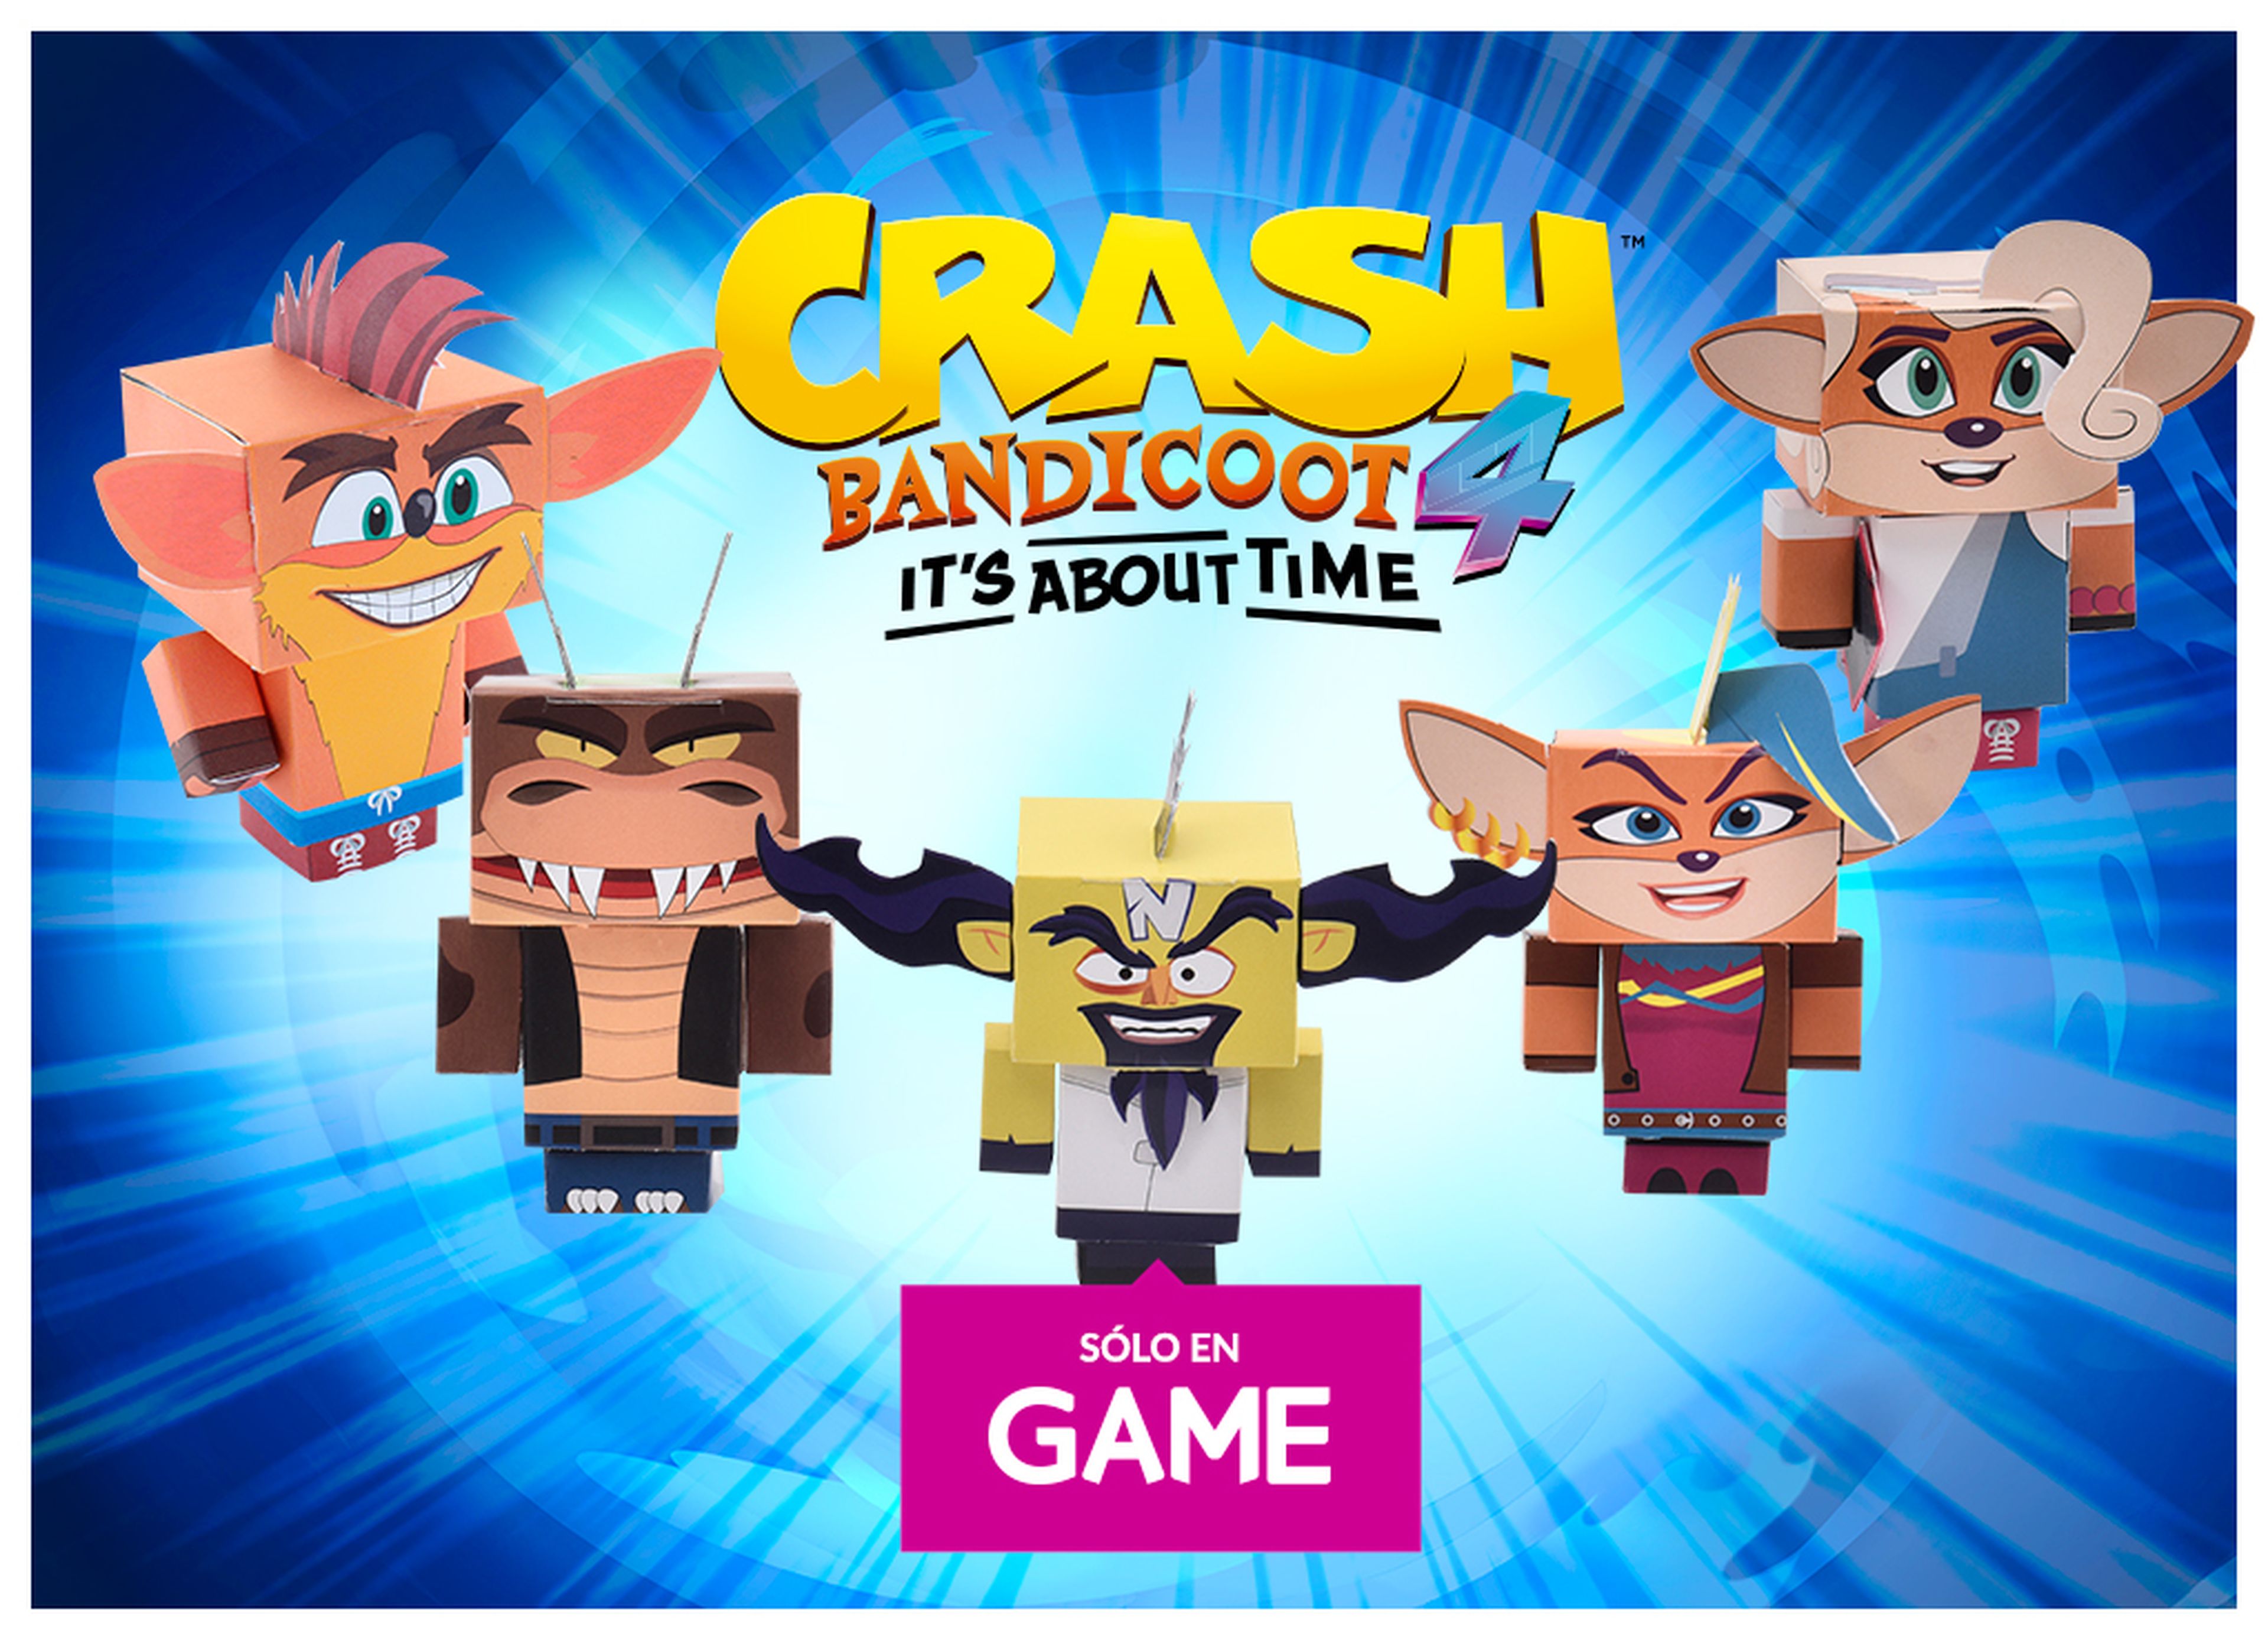 Crash Bandicoot GAME